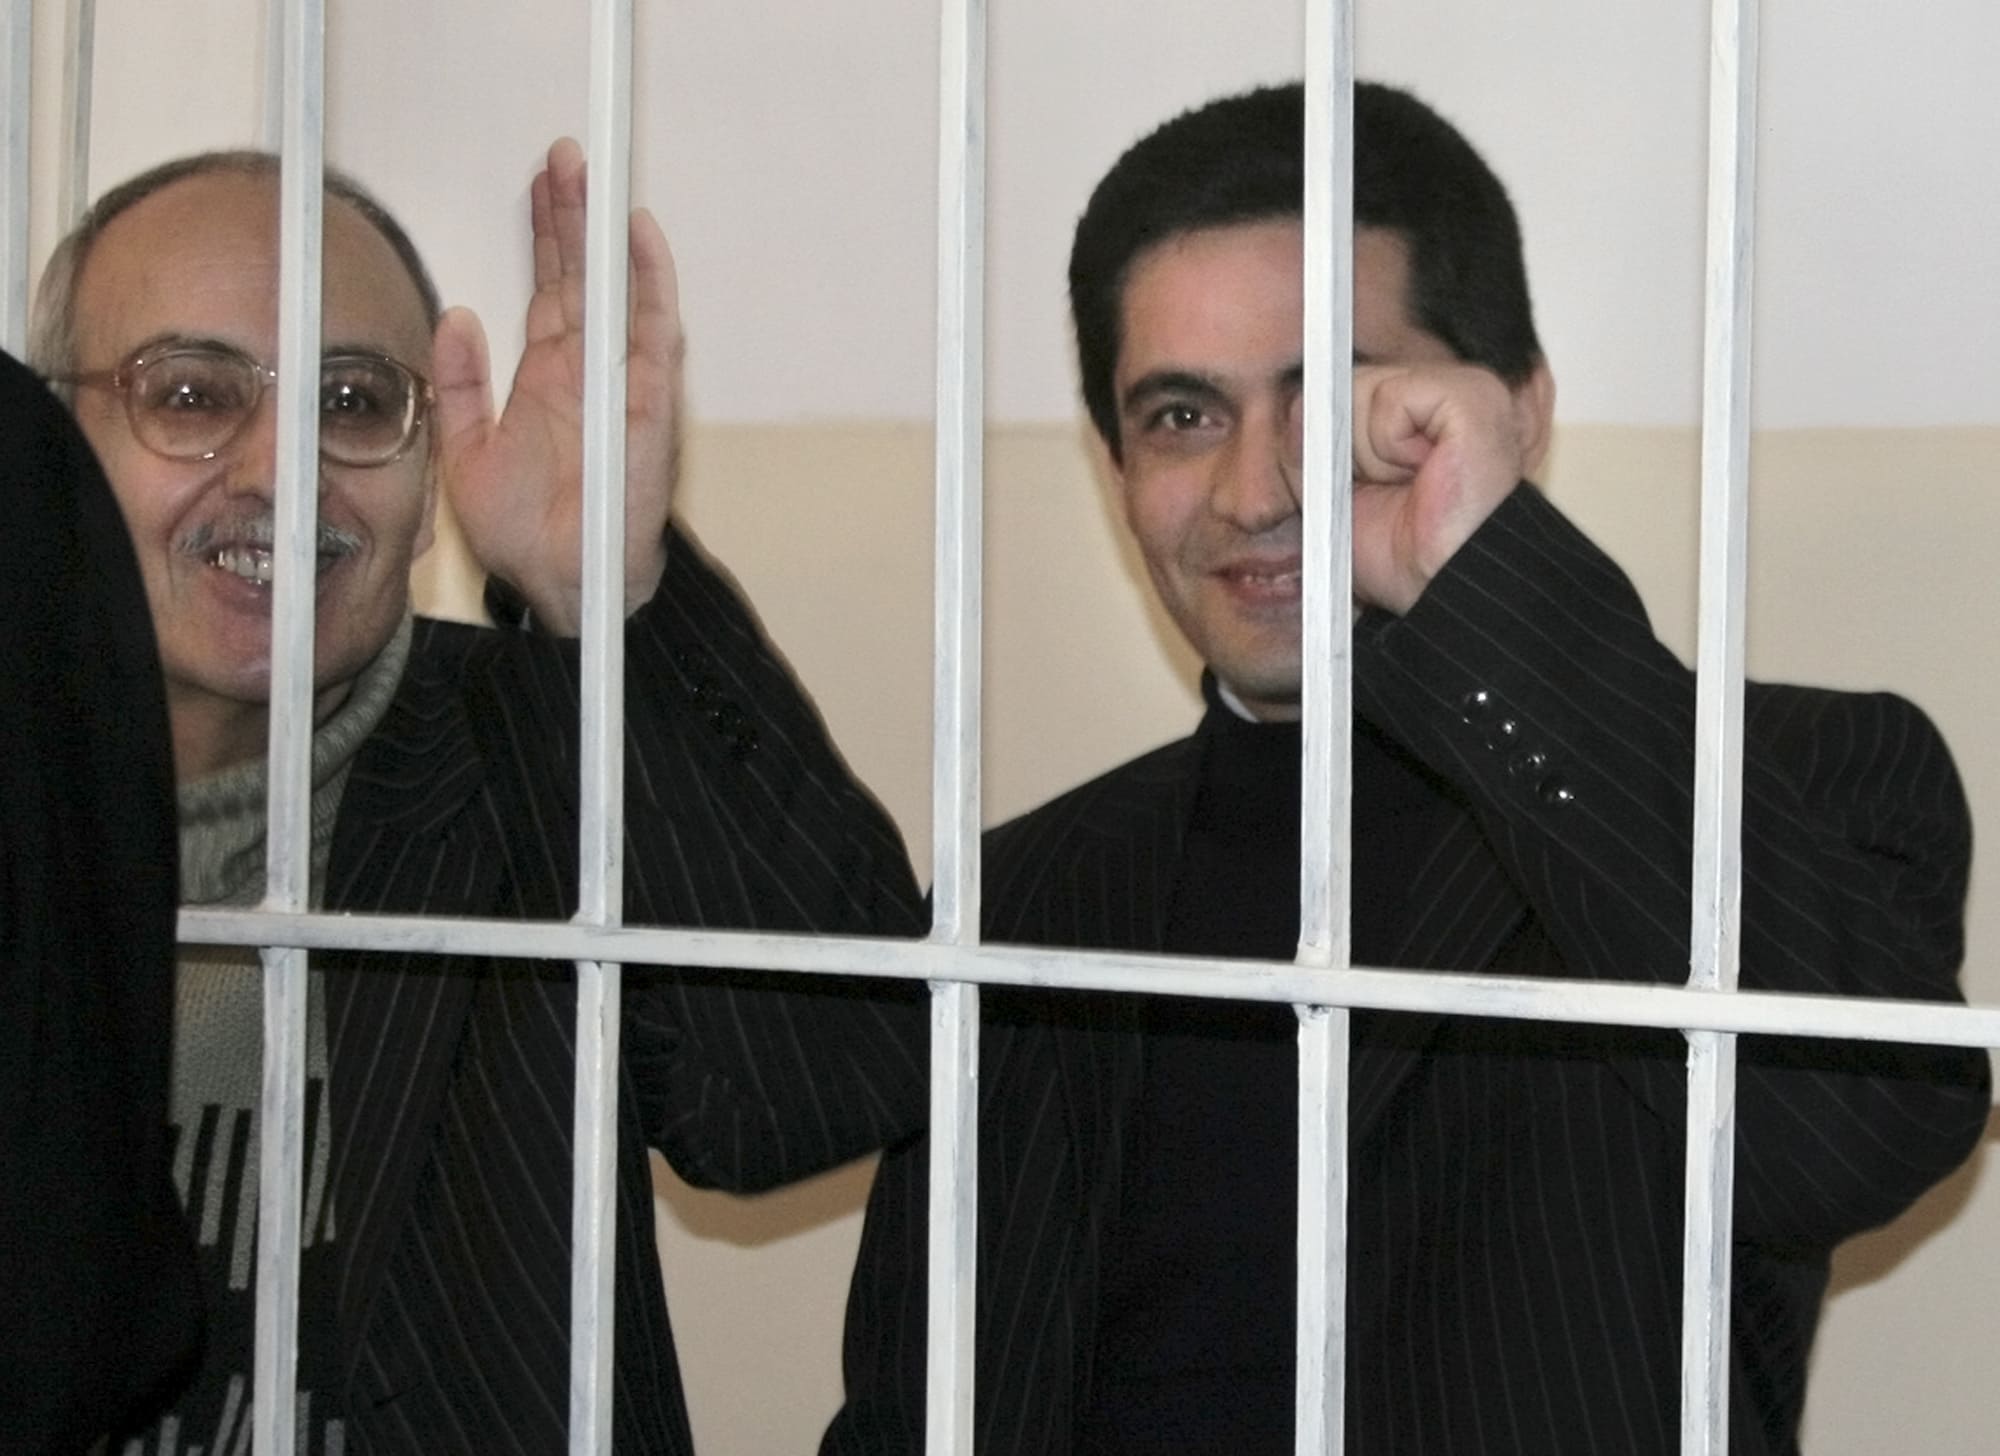 Azerbaijani reporter Rafiq Tagi, left, and editor Samir Huseinov of the newspaper Senet seen during a trial in Baku, Azerbaijan, 5 March, 2007. , AP Photo/Aida Sultanova